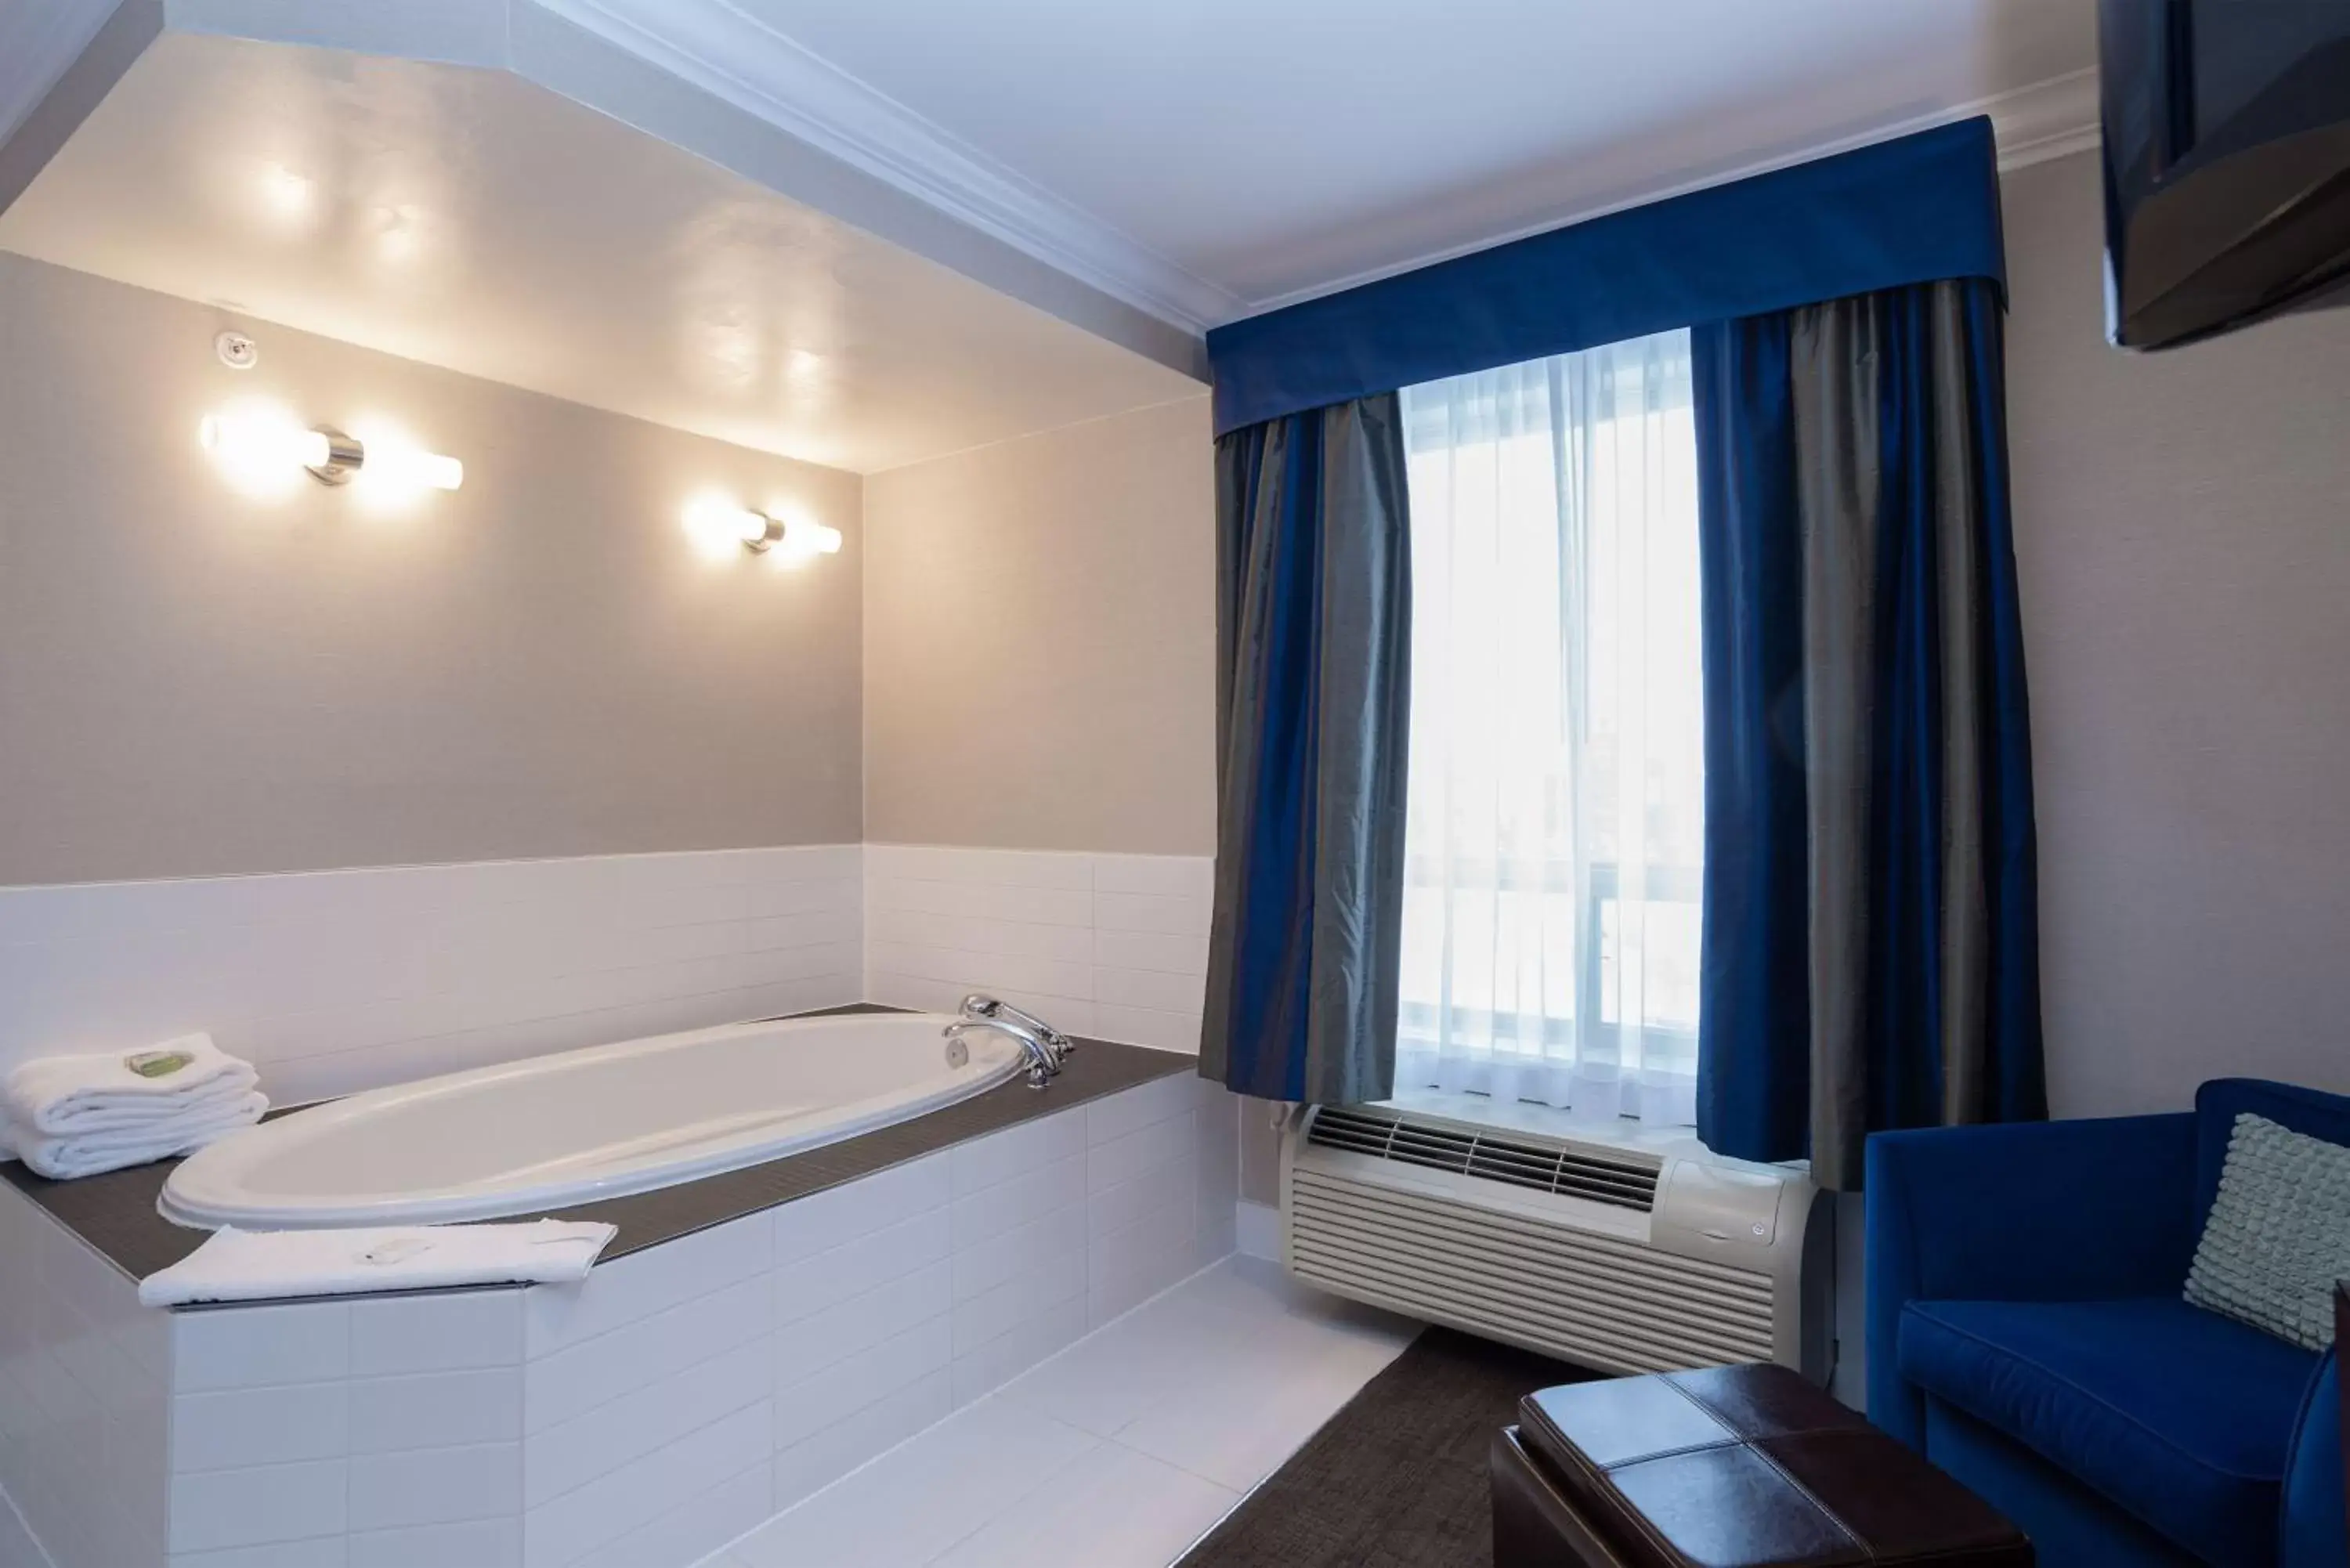 Photo of the whole room, Bathroom in Sandman Signature Edmonton South Hotel